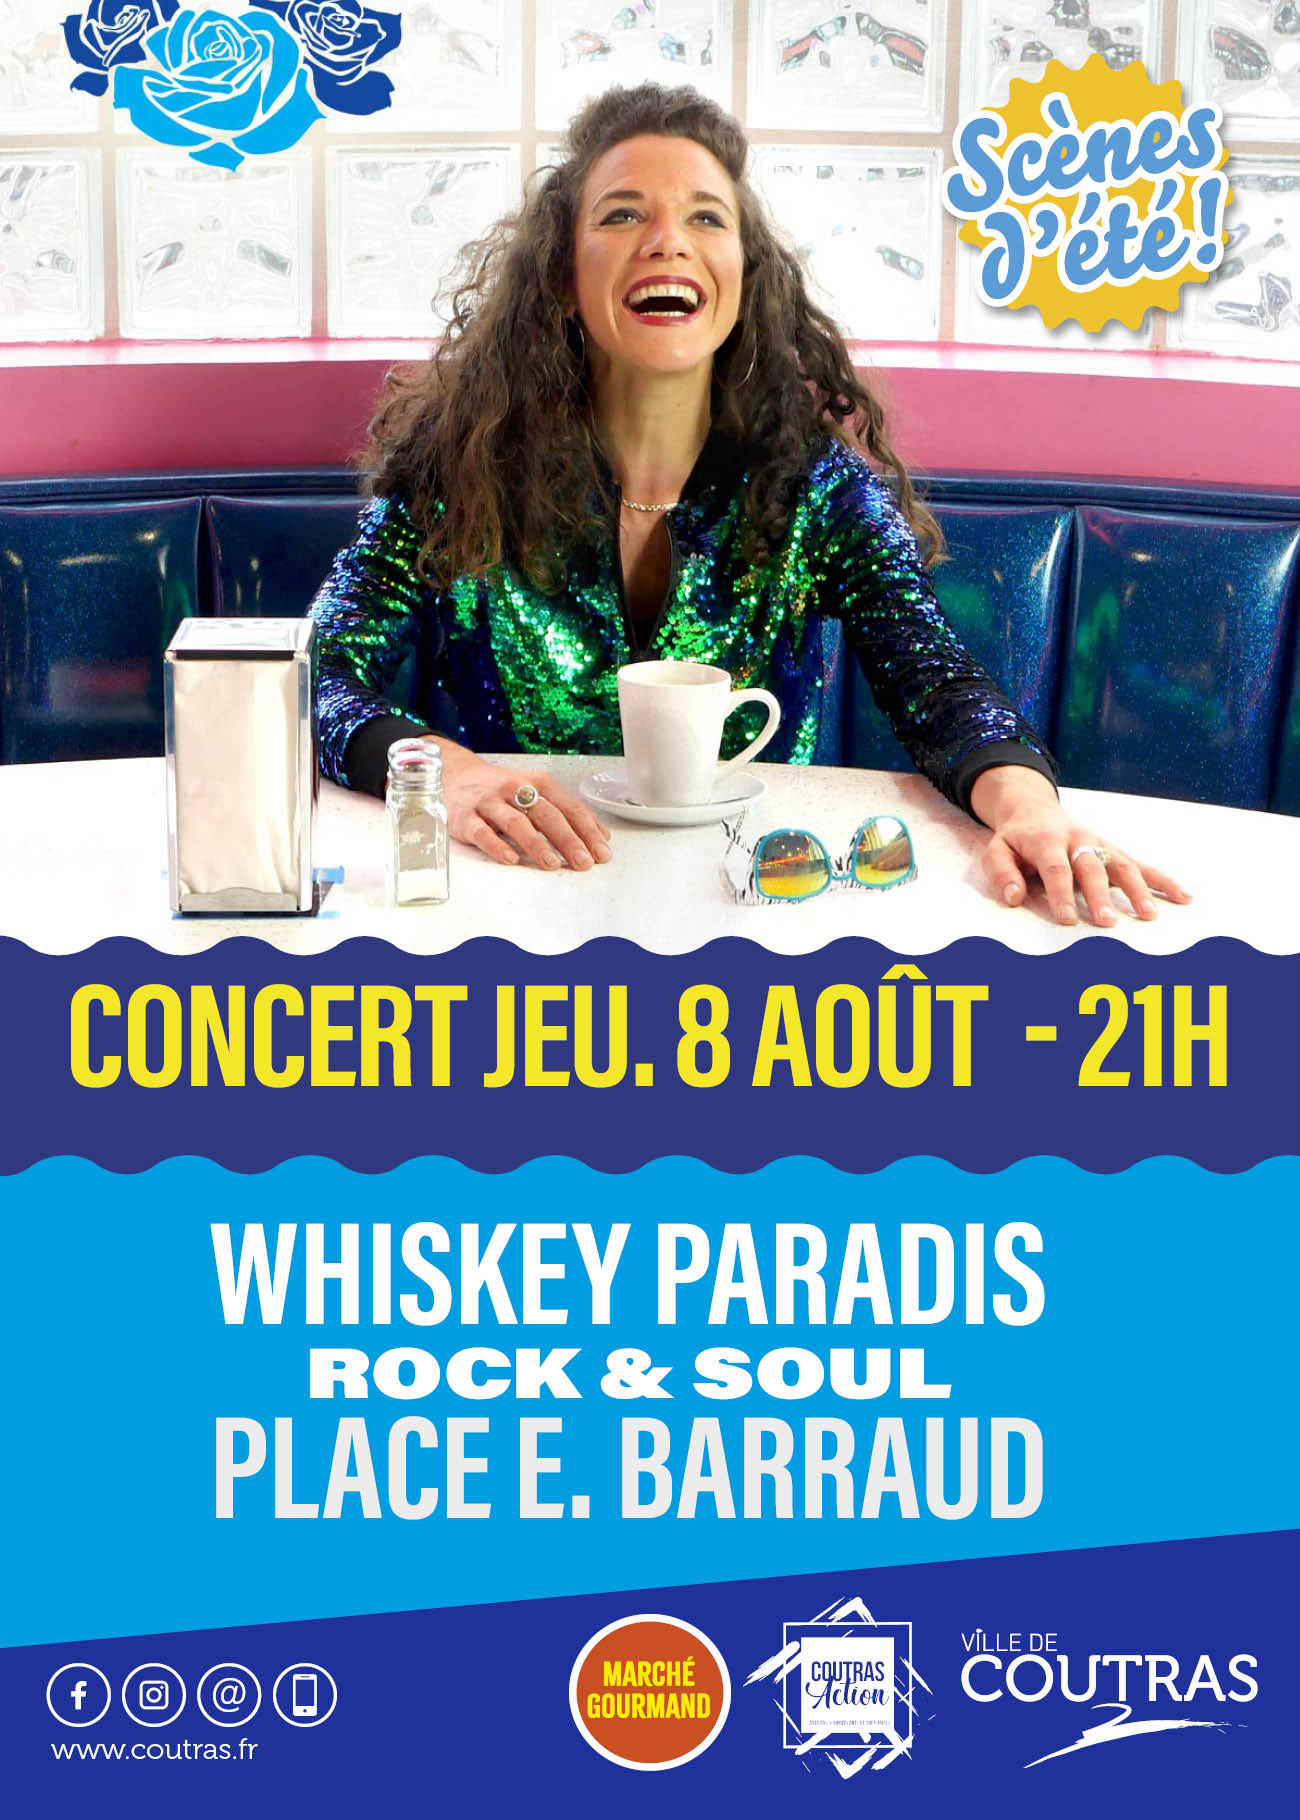 Summer Concerts - Whiskey Paradis